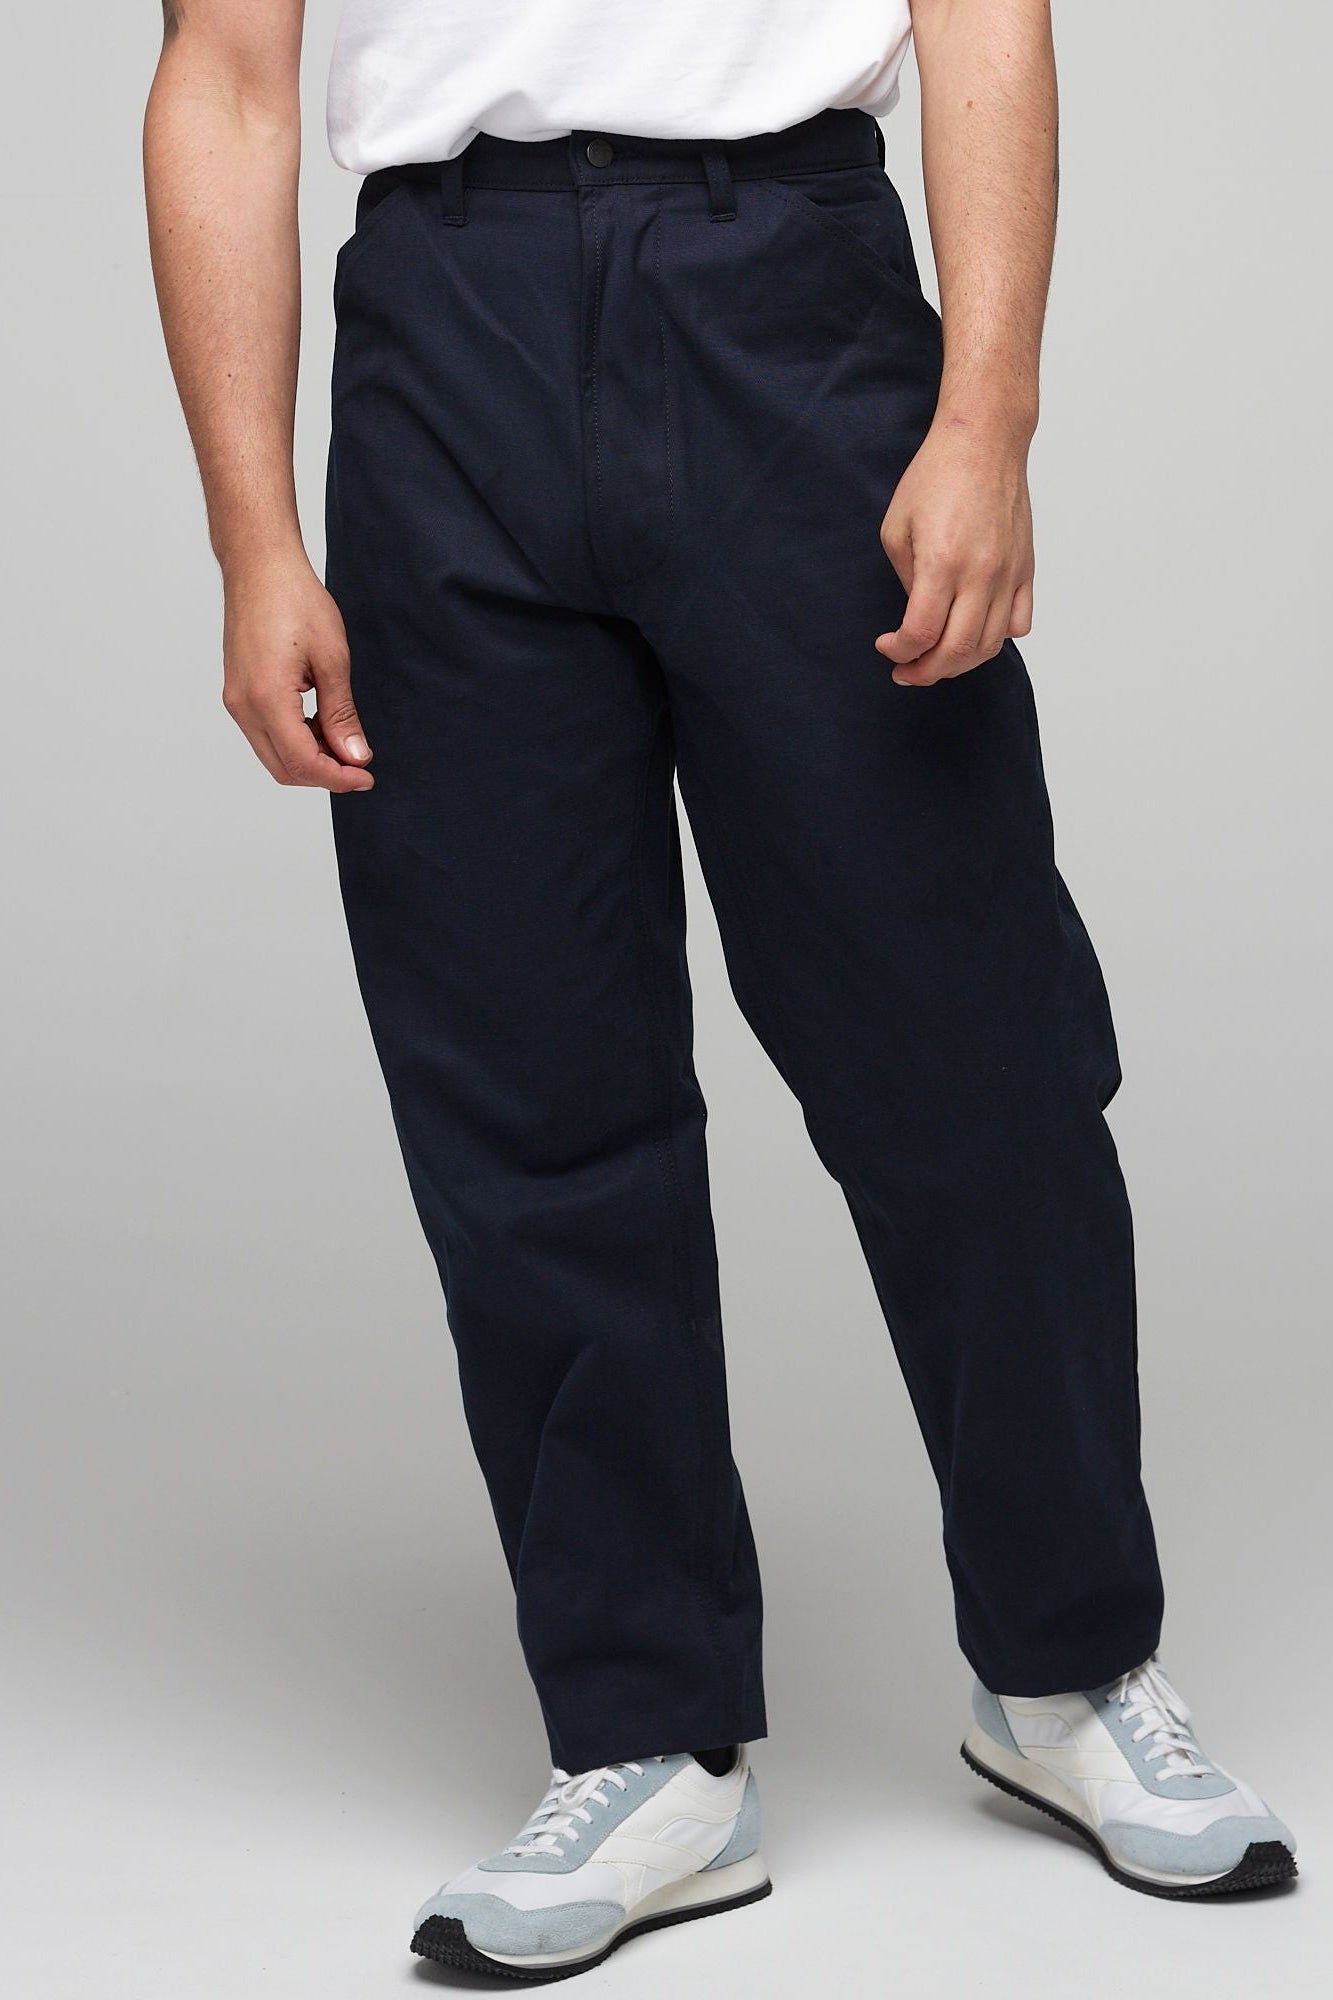 Men's Canvas Chore Trousers - Navy - Community Clothing